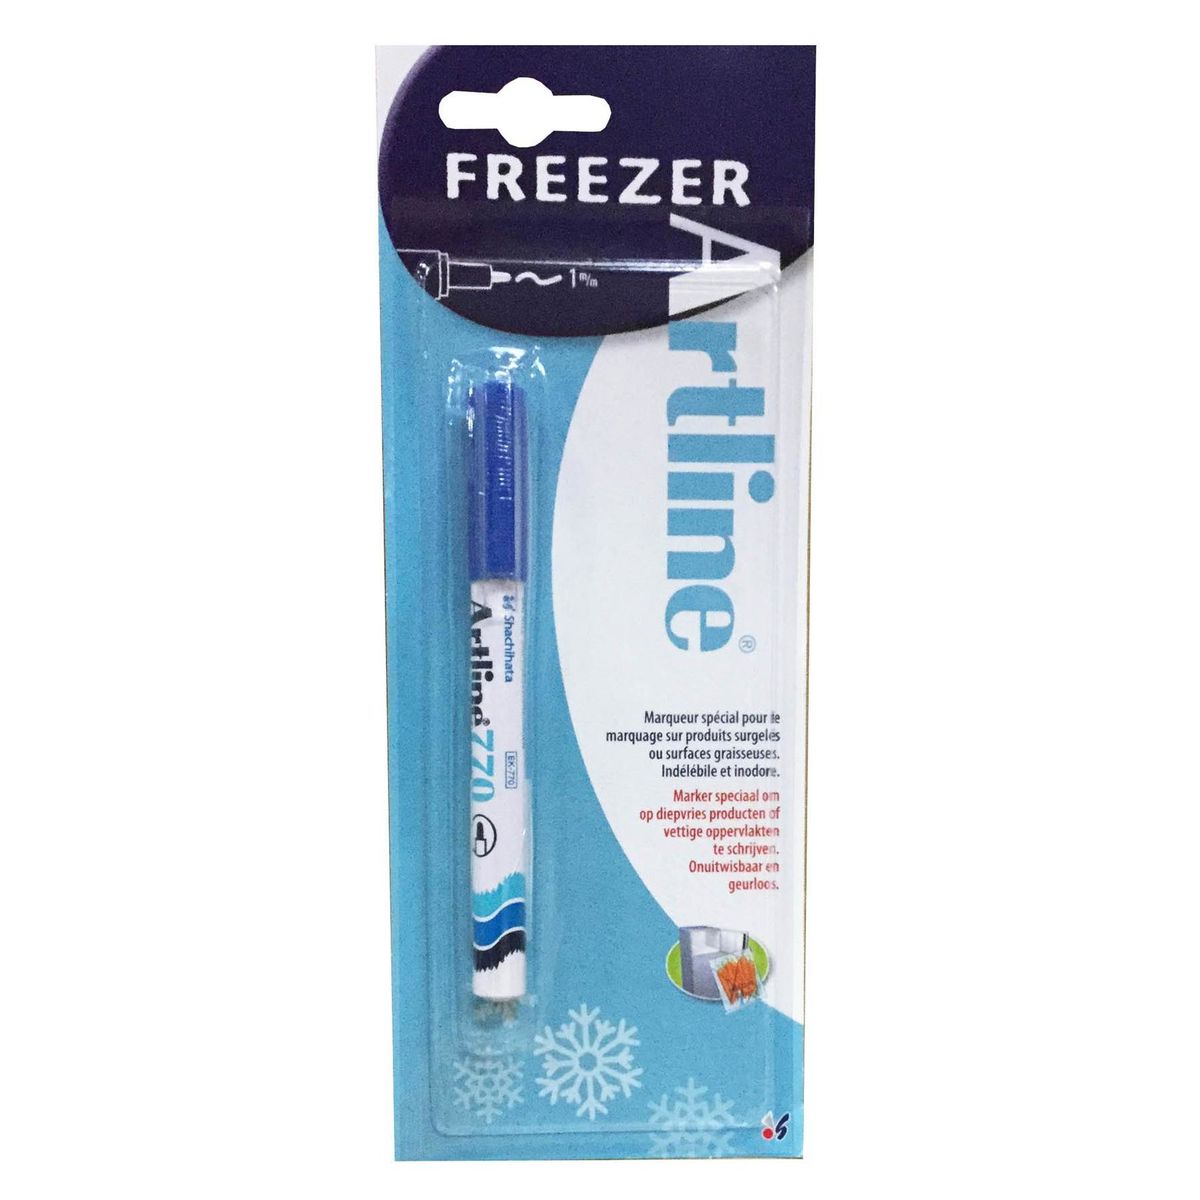 770 Freezer Bag Marker - Bleu | Carrefour Site